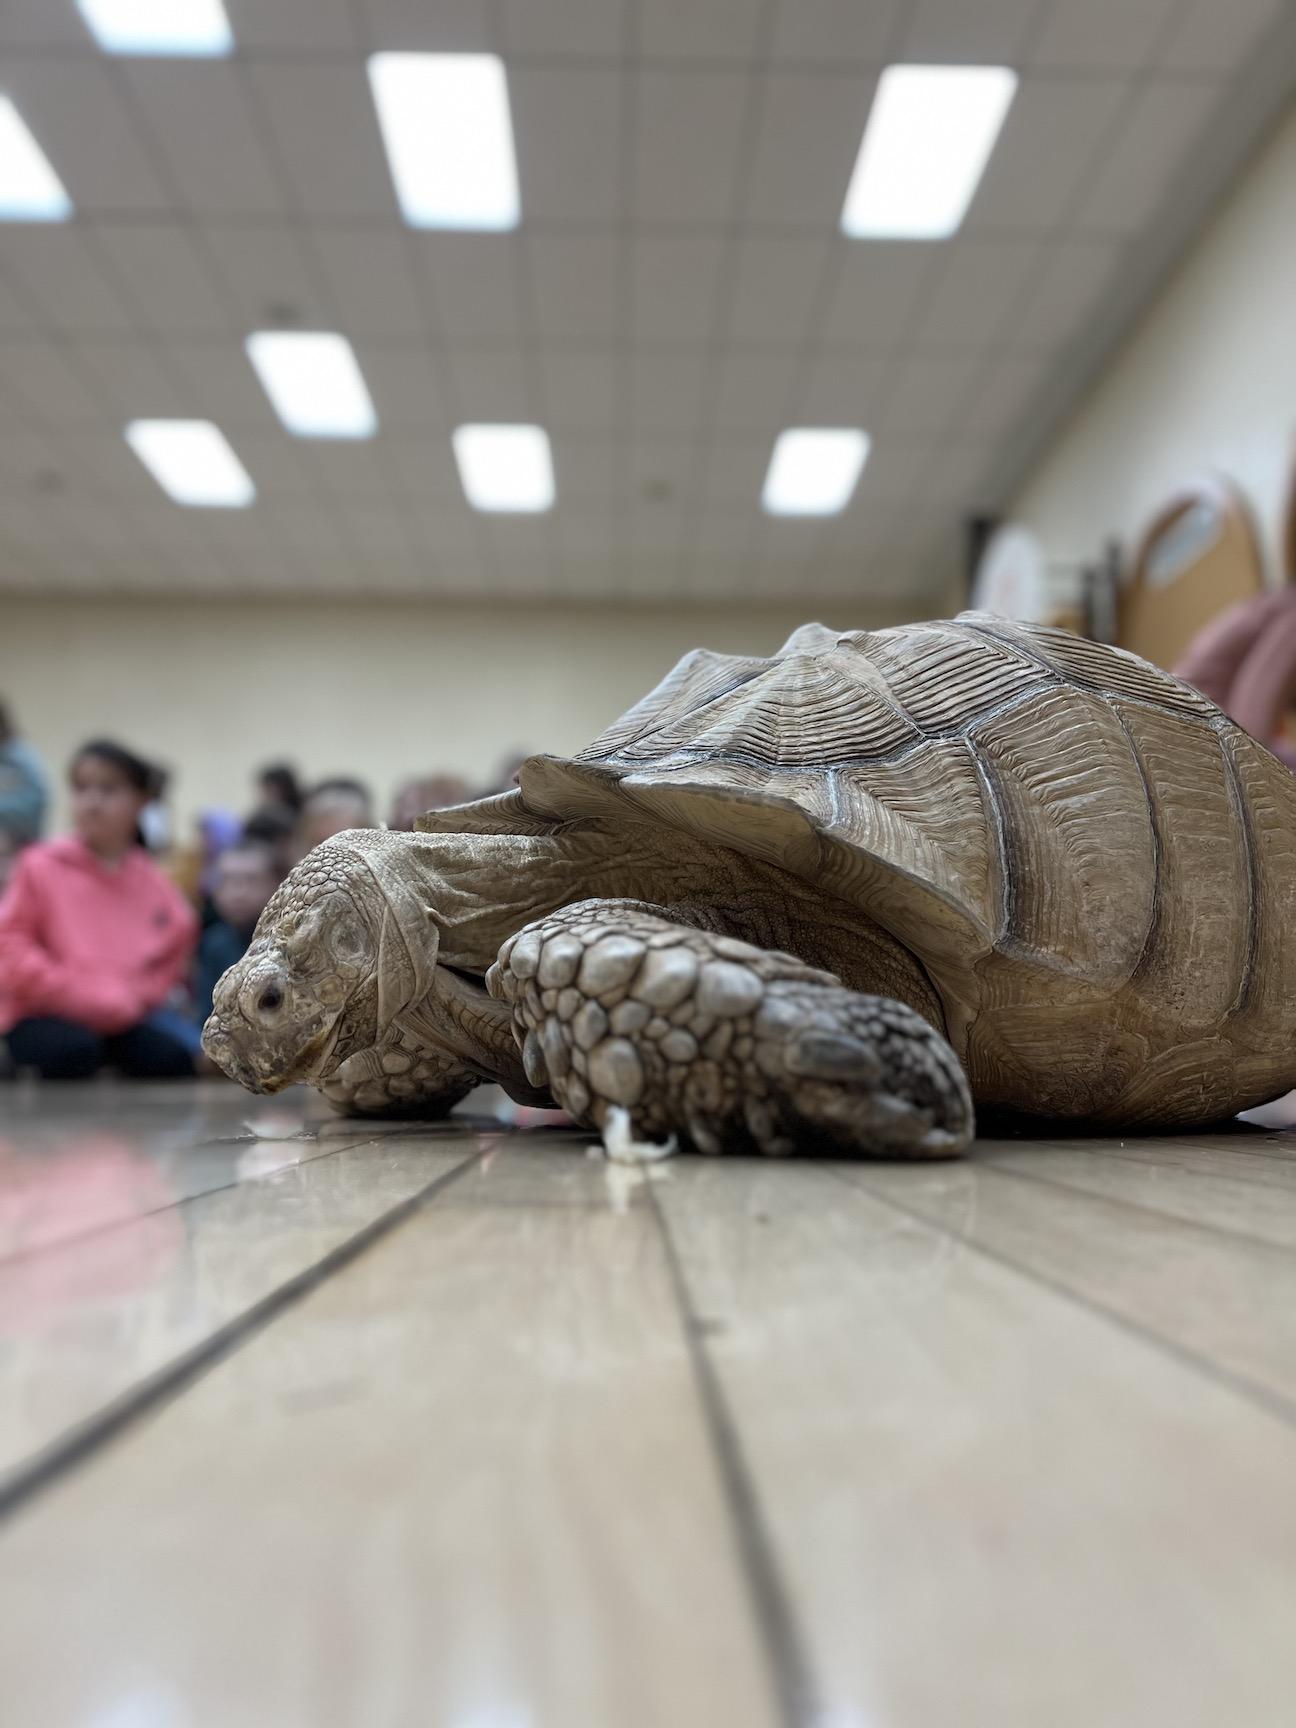 Sheldon the tortoise roams the auditorium during the assembly